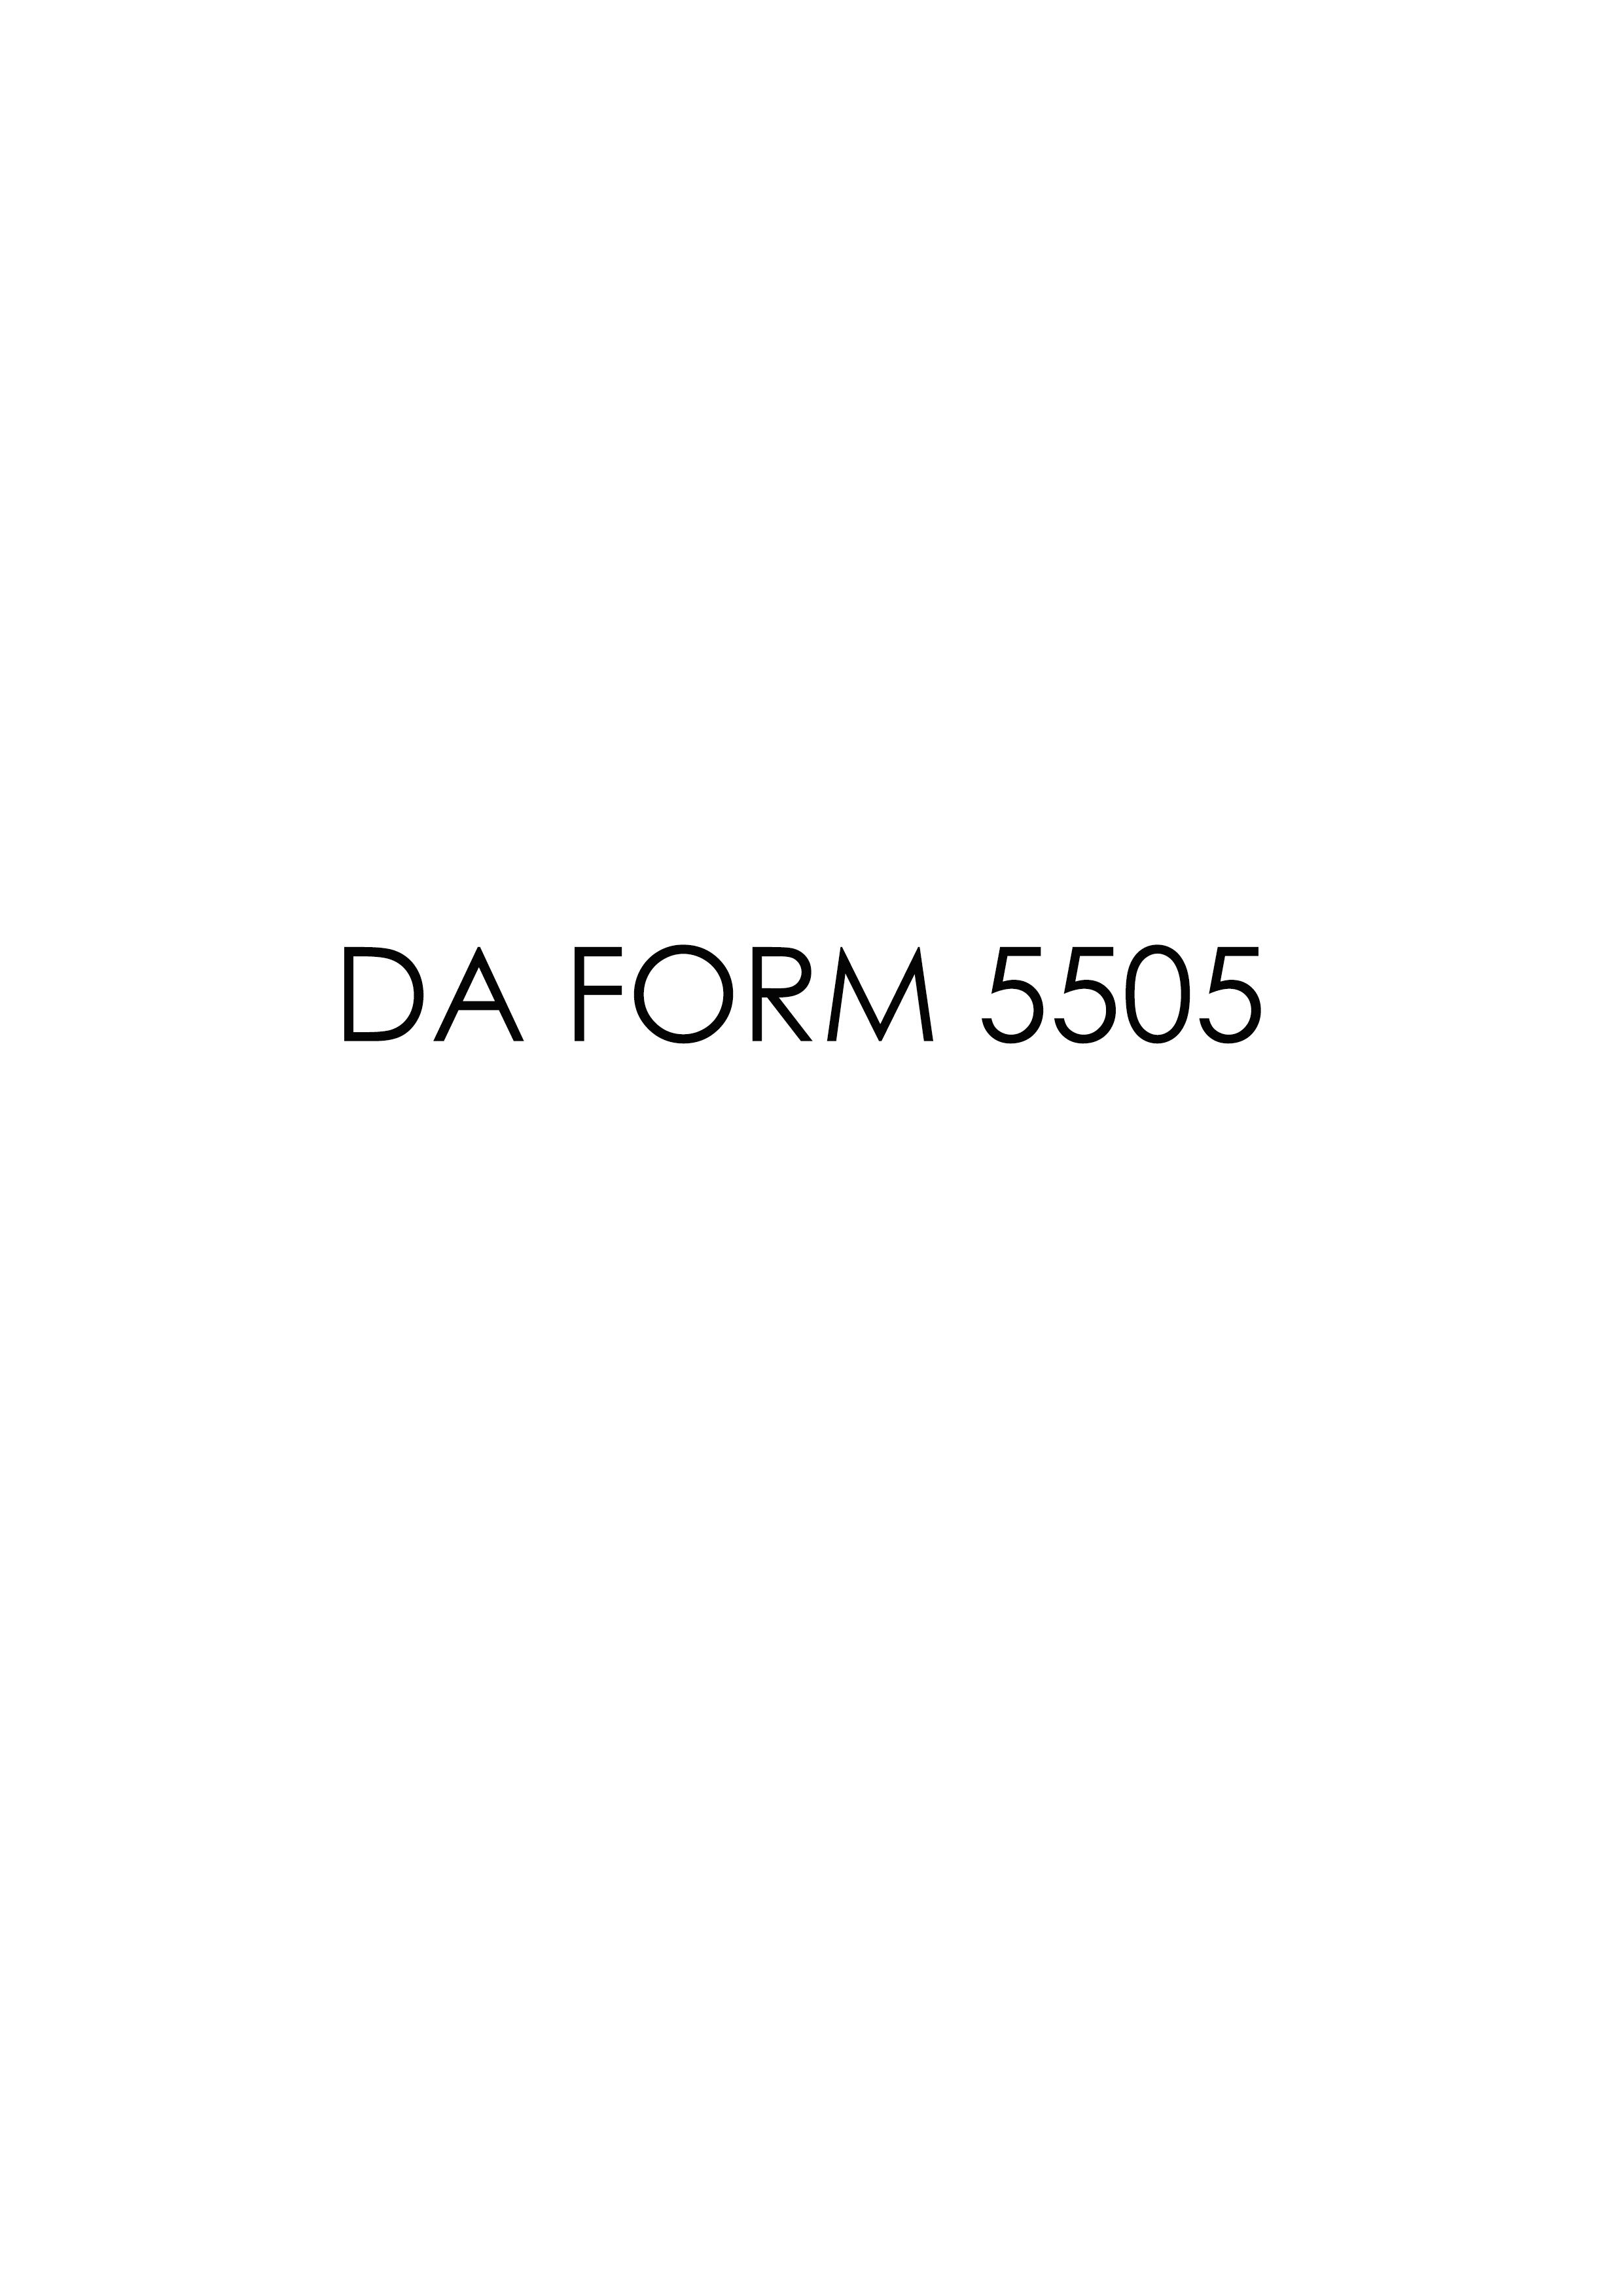 da Form 5505 fillable